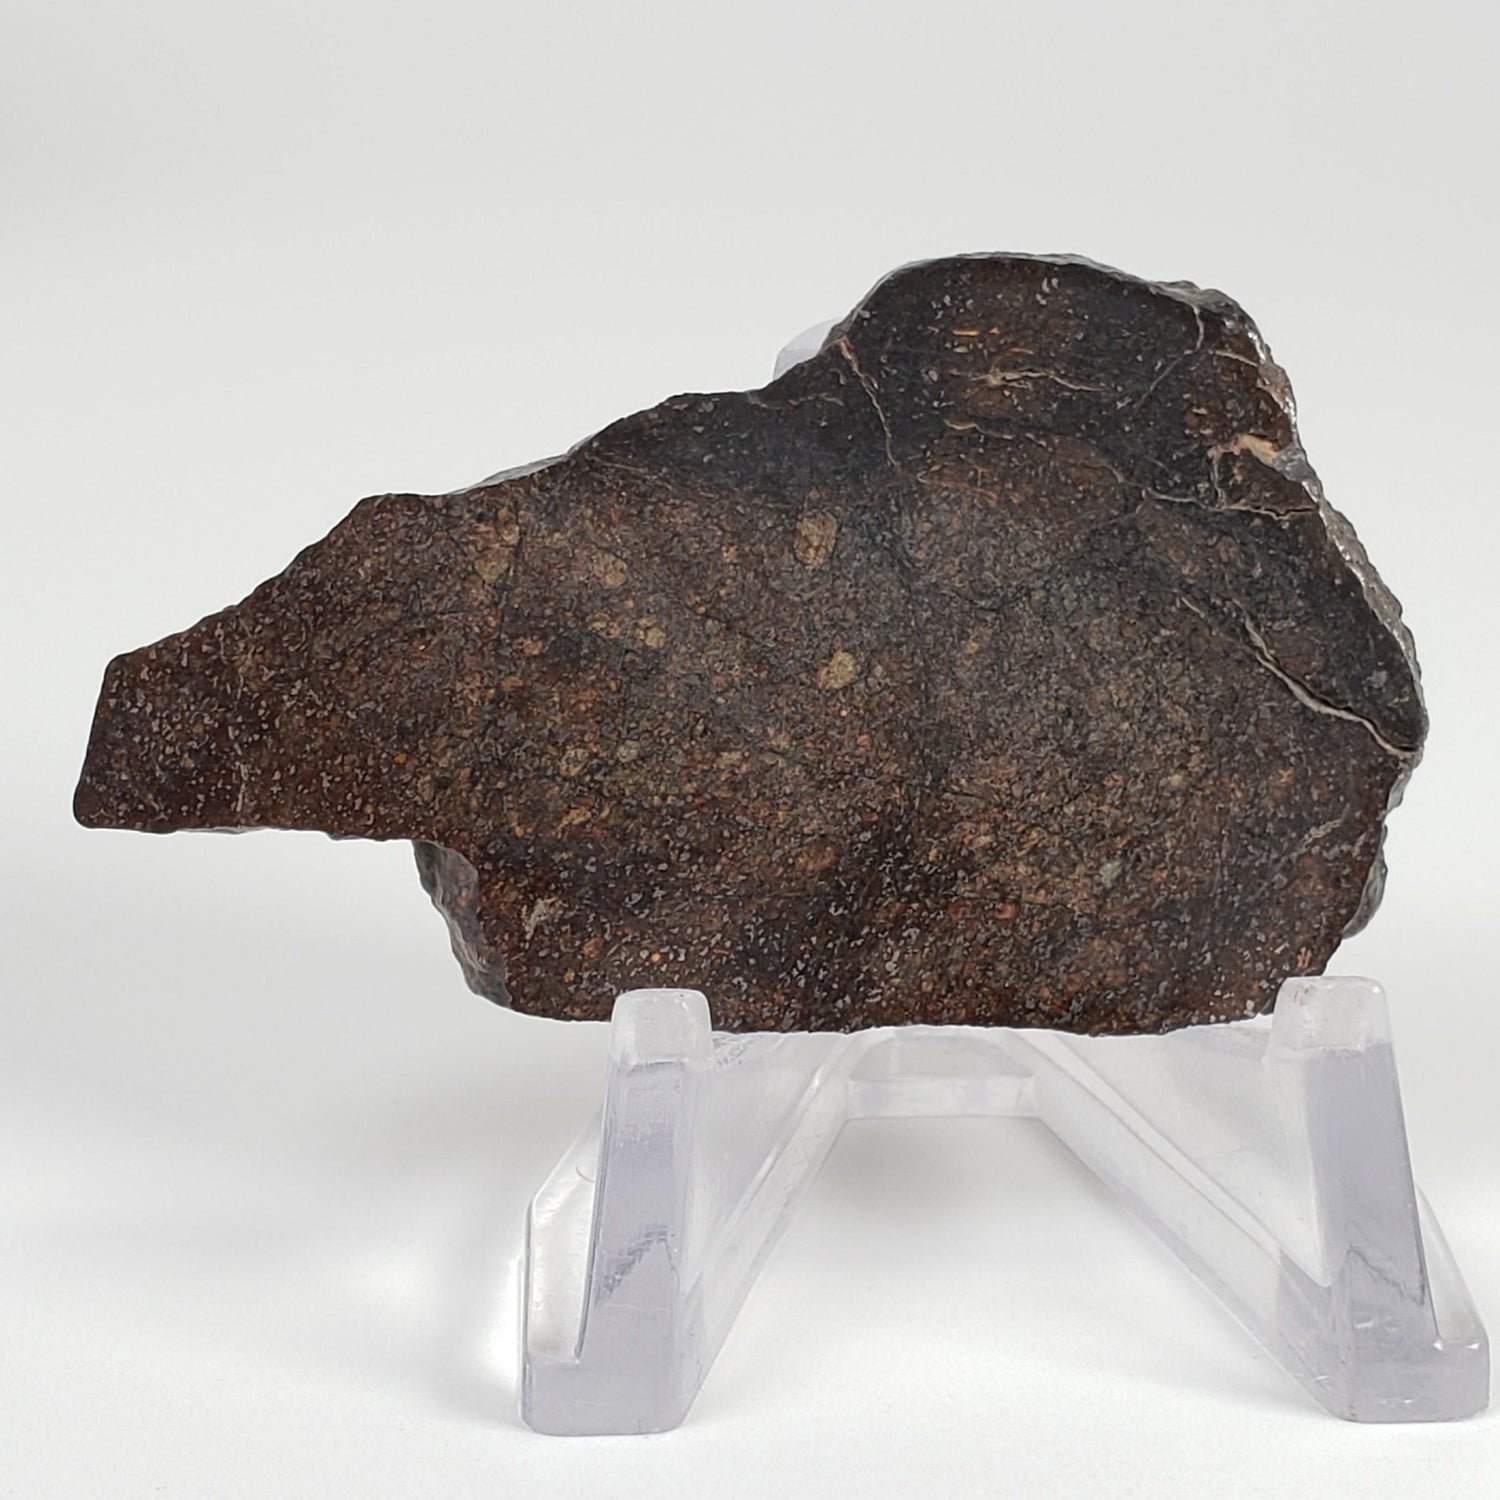 Capot Rey Meteorite | 15.88gr | Full Slice | H5 Chondrules | Found 2004 in Niger | Canagem.com